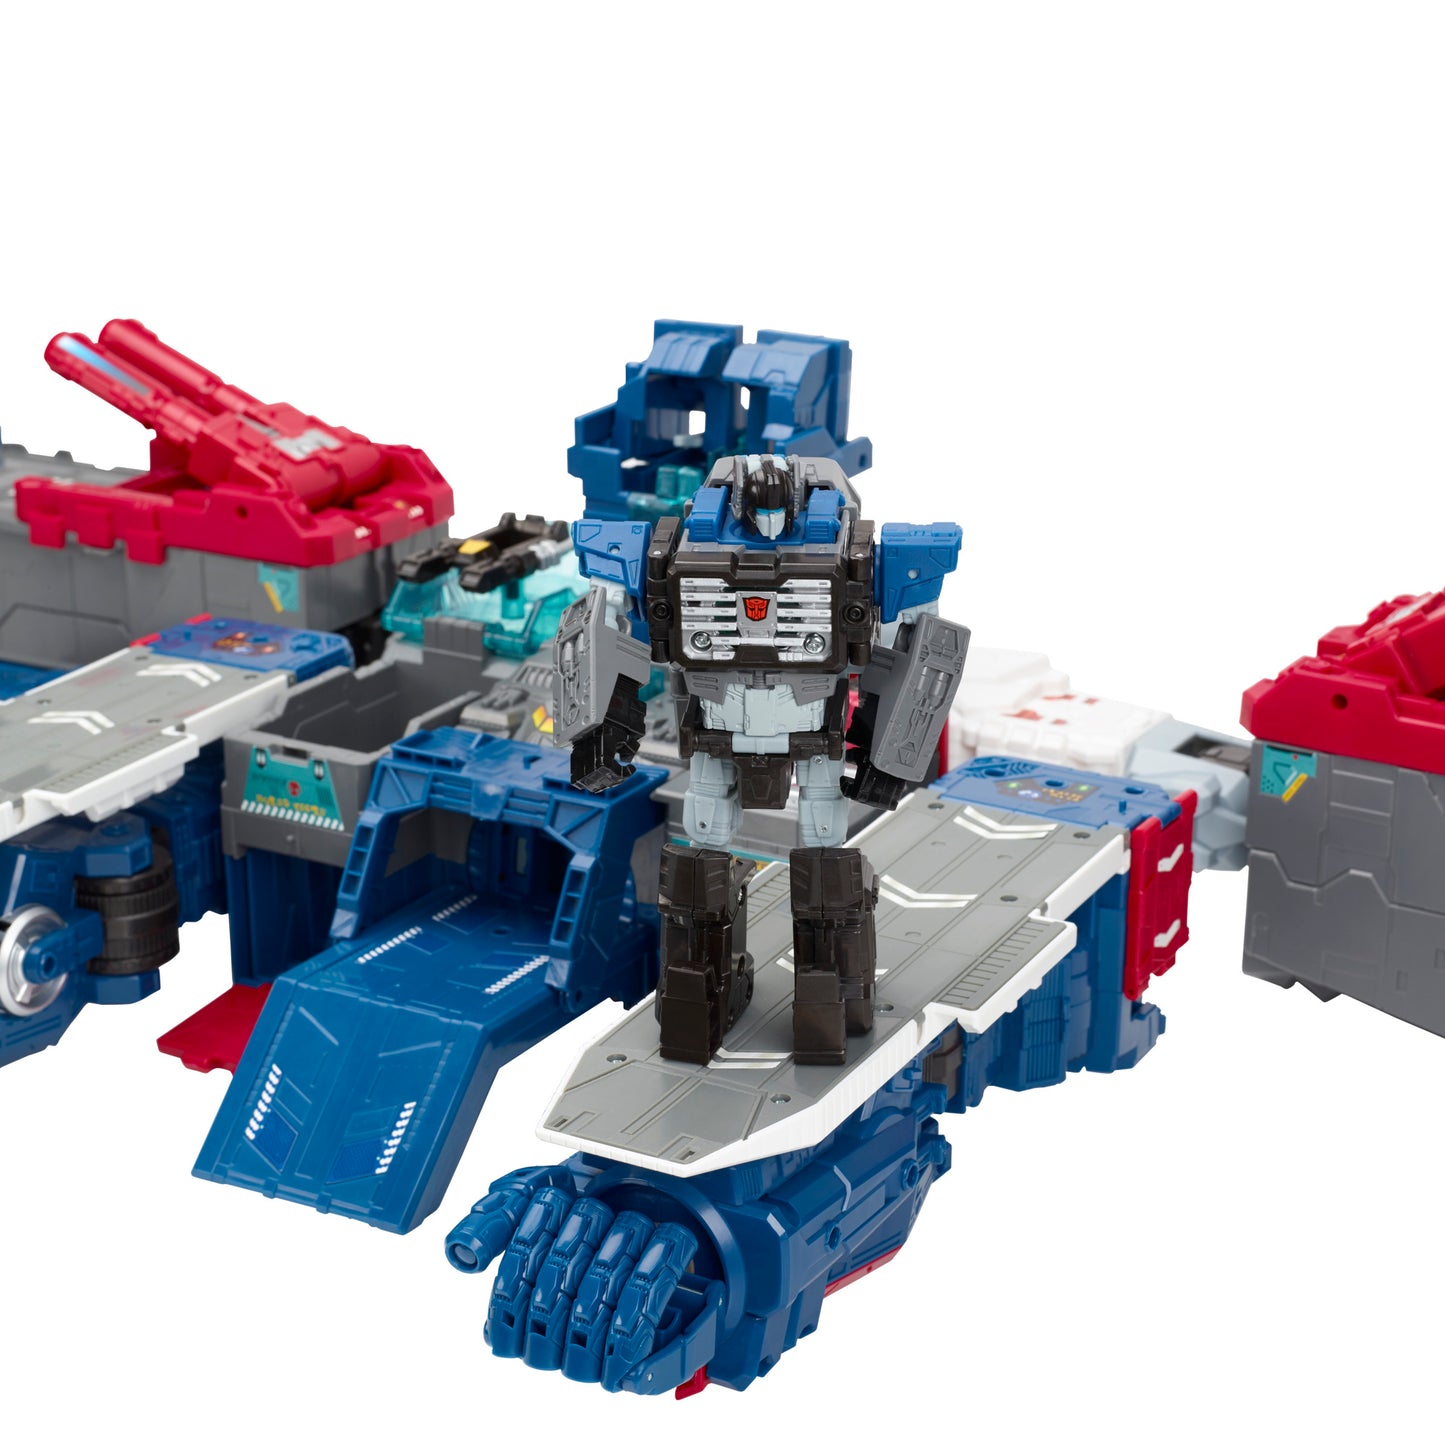 Transformers Generations Titans Return Titan Class Fortress Maximus Action Figure Toy